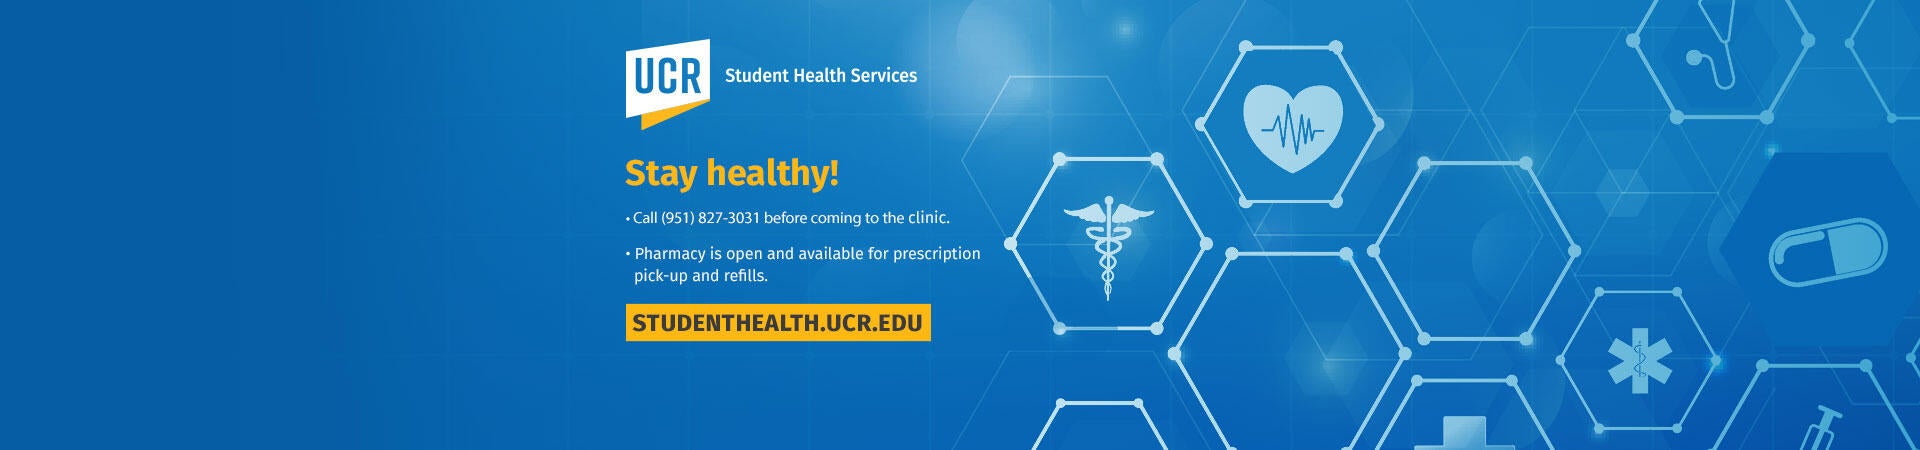 student health portal